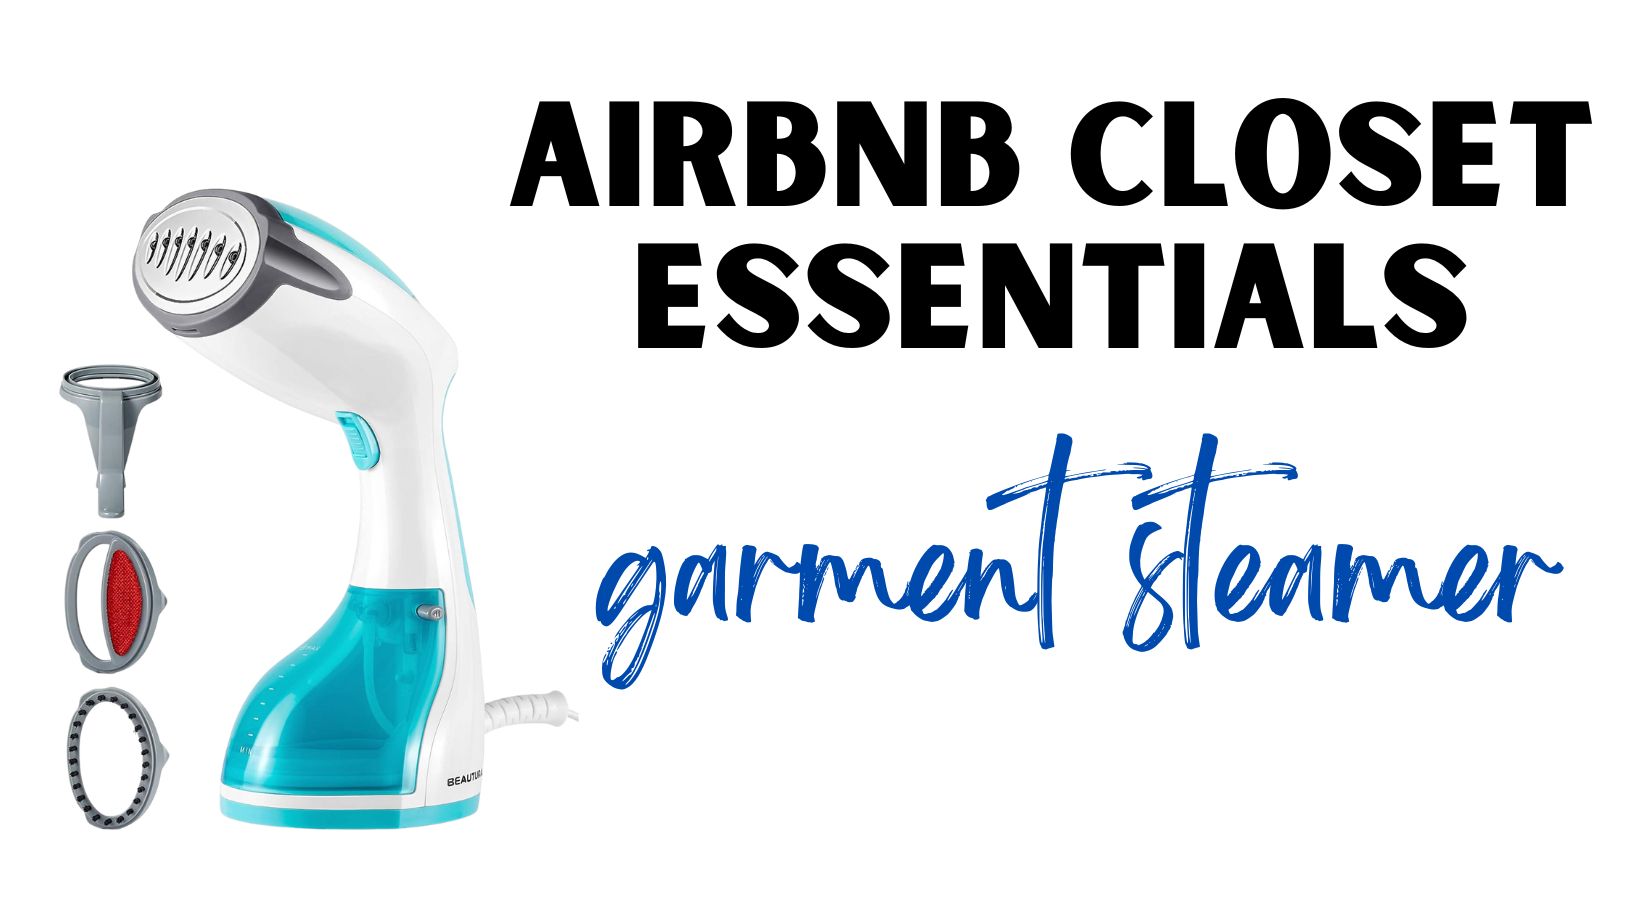 Airbnb Closet Garment Steamer